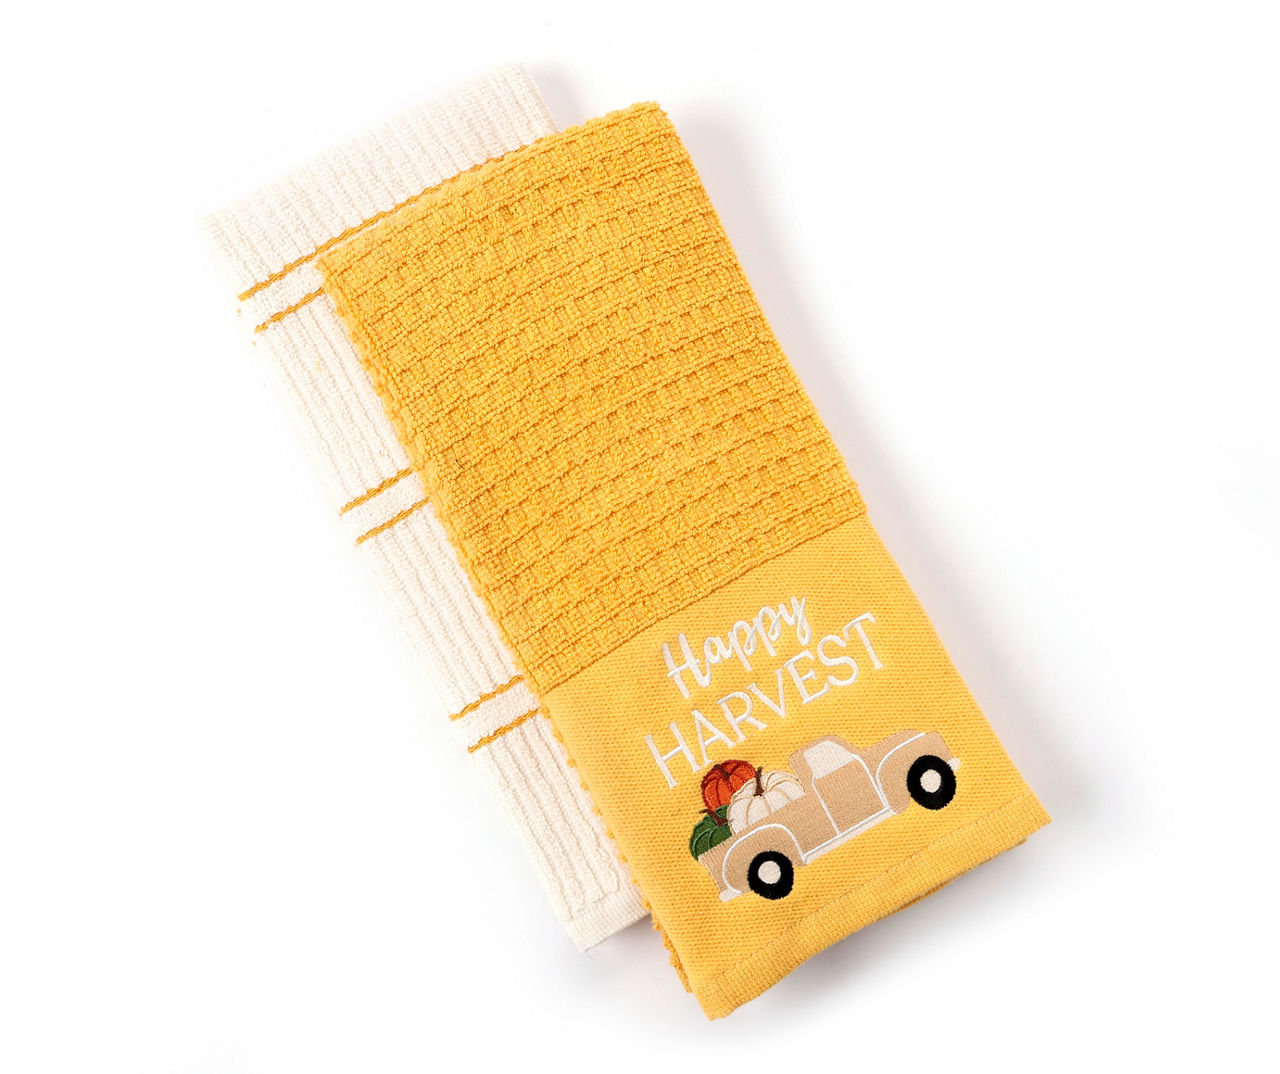 Homewear Harvest Fall Colors 4-pc. Waffle Kitchen Towel